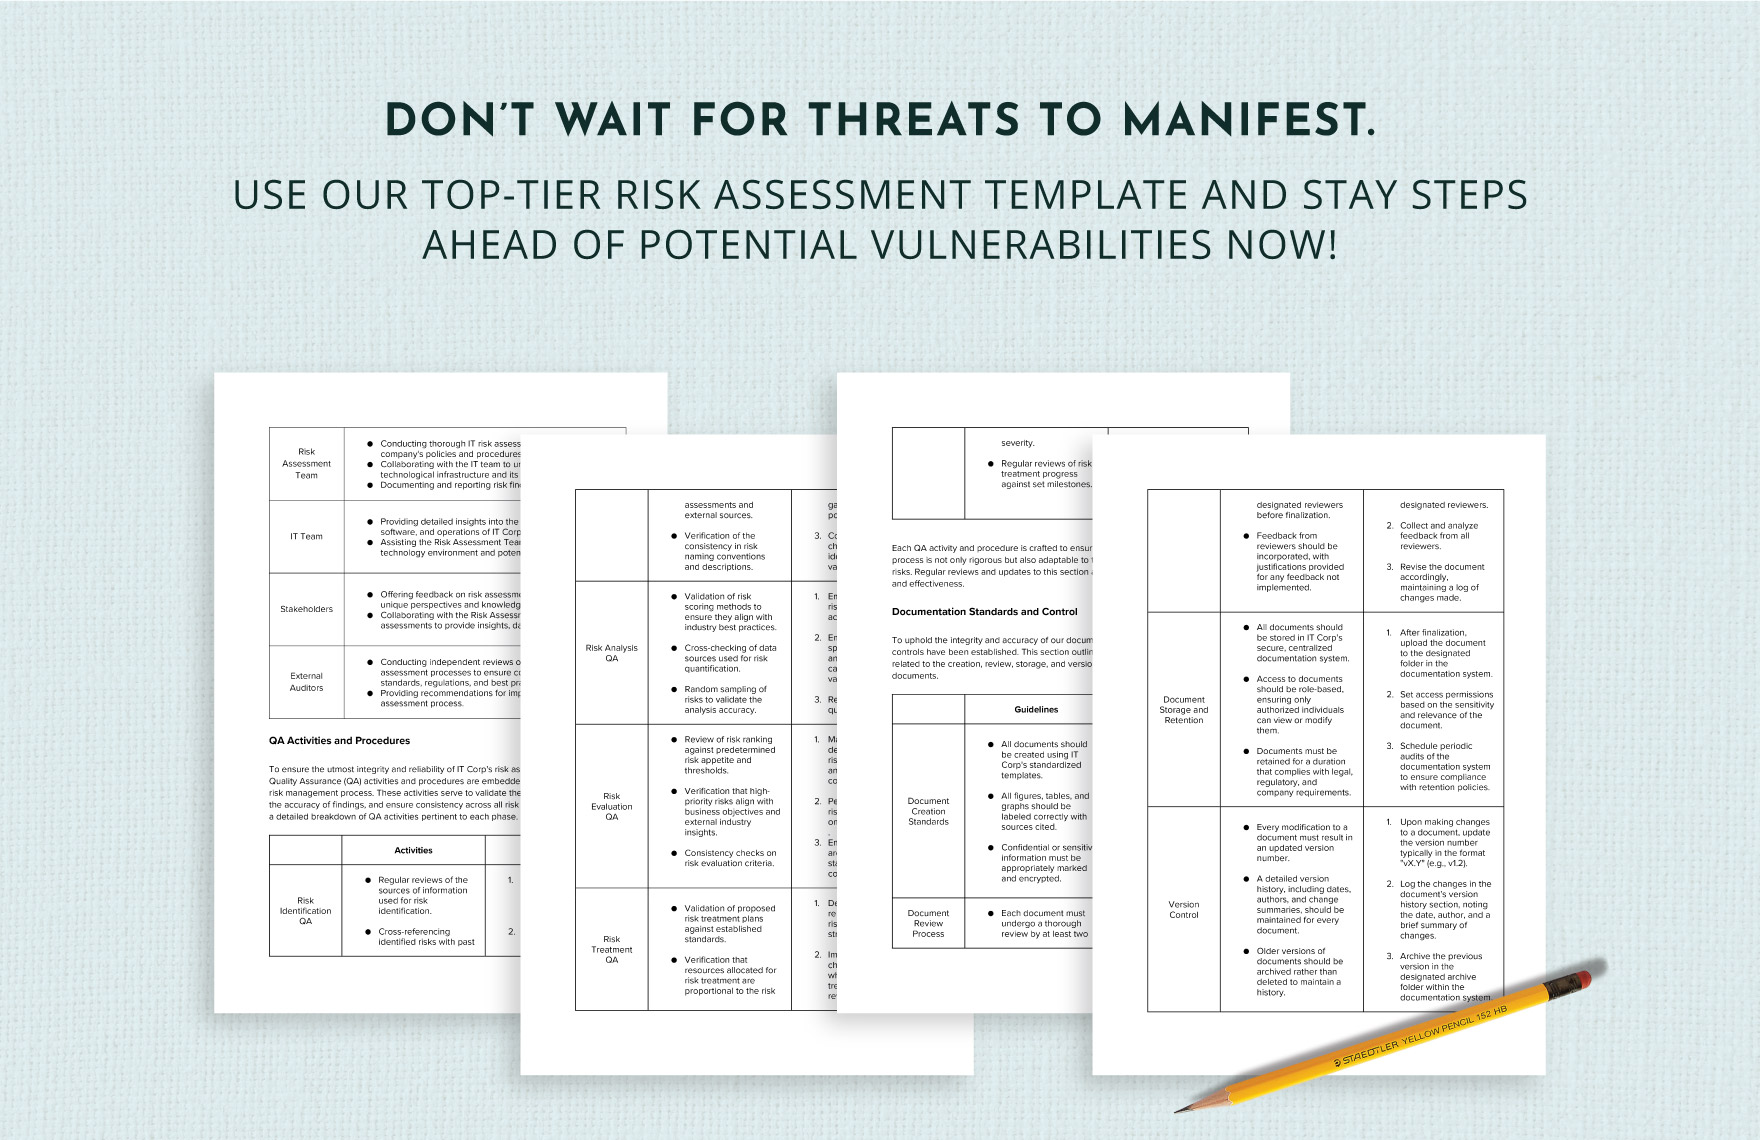 IT Risk Assessment Quality Assurance Plan Template